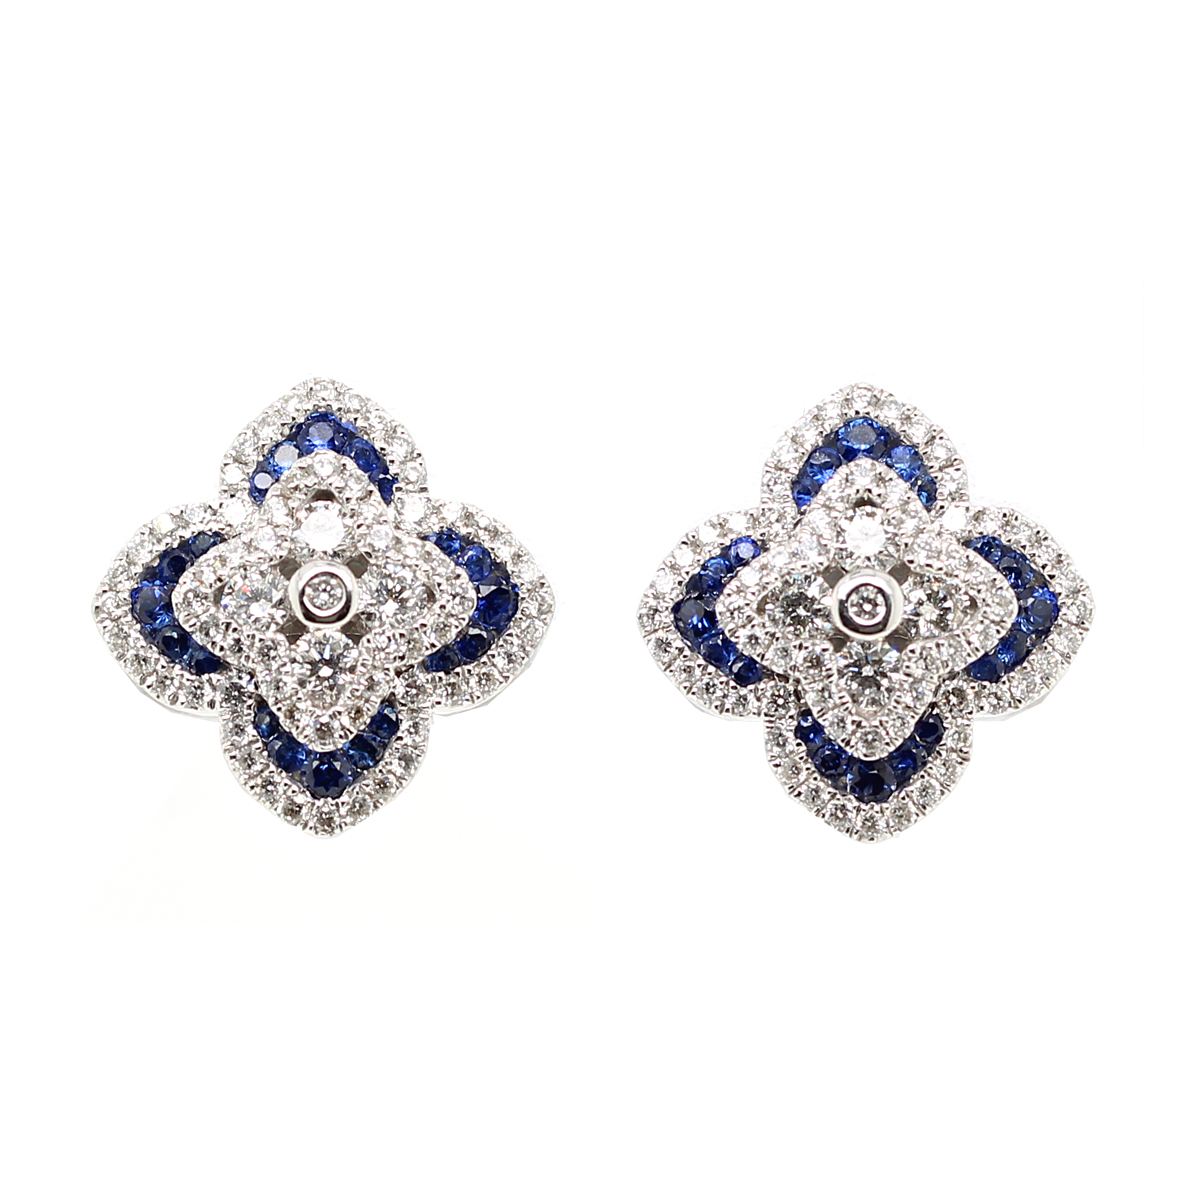 Charles Krypell 18 Karat White Gold Diamond and Blue Sapphire Square Earrings